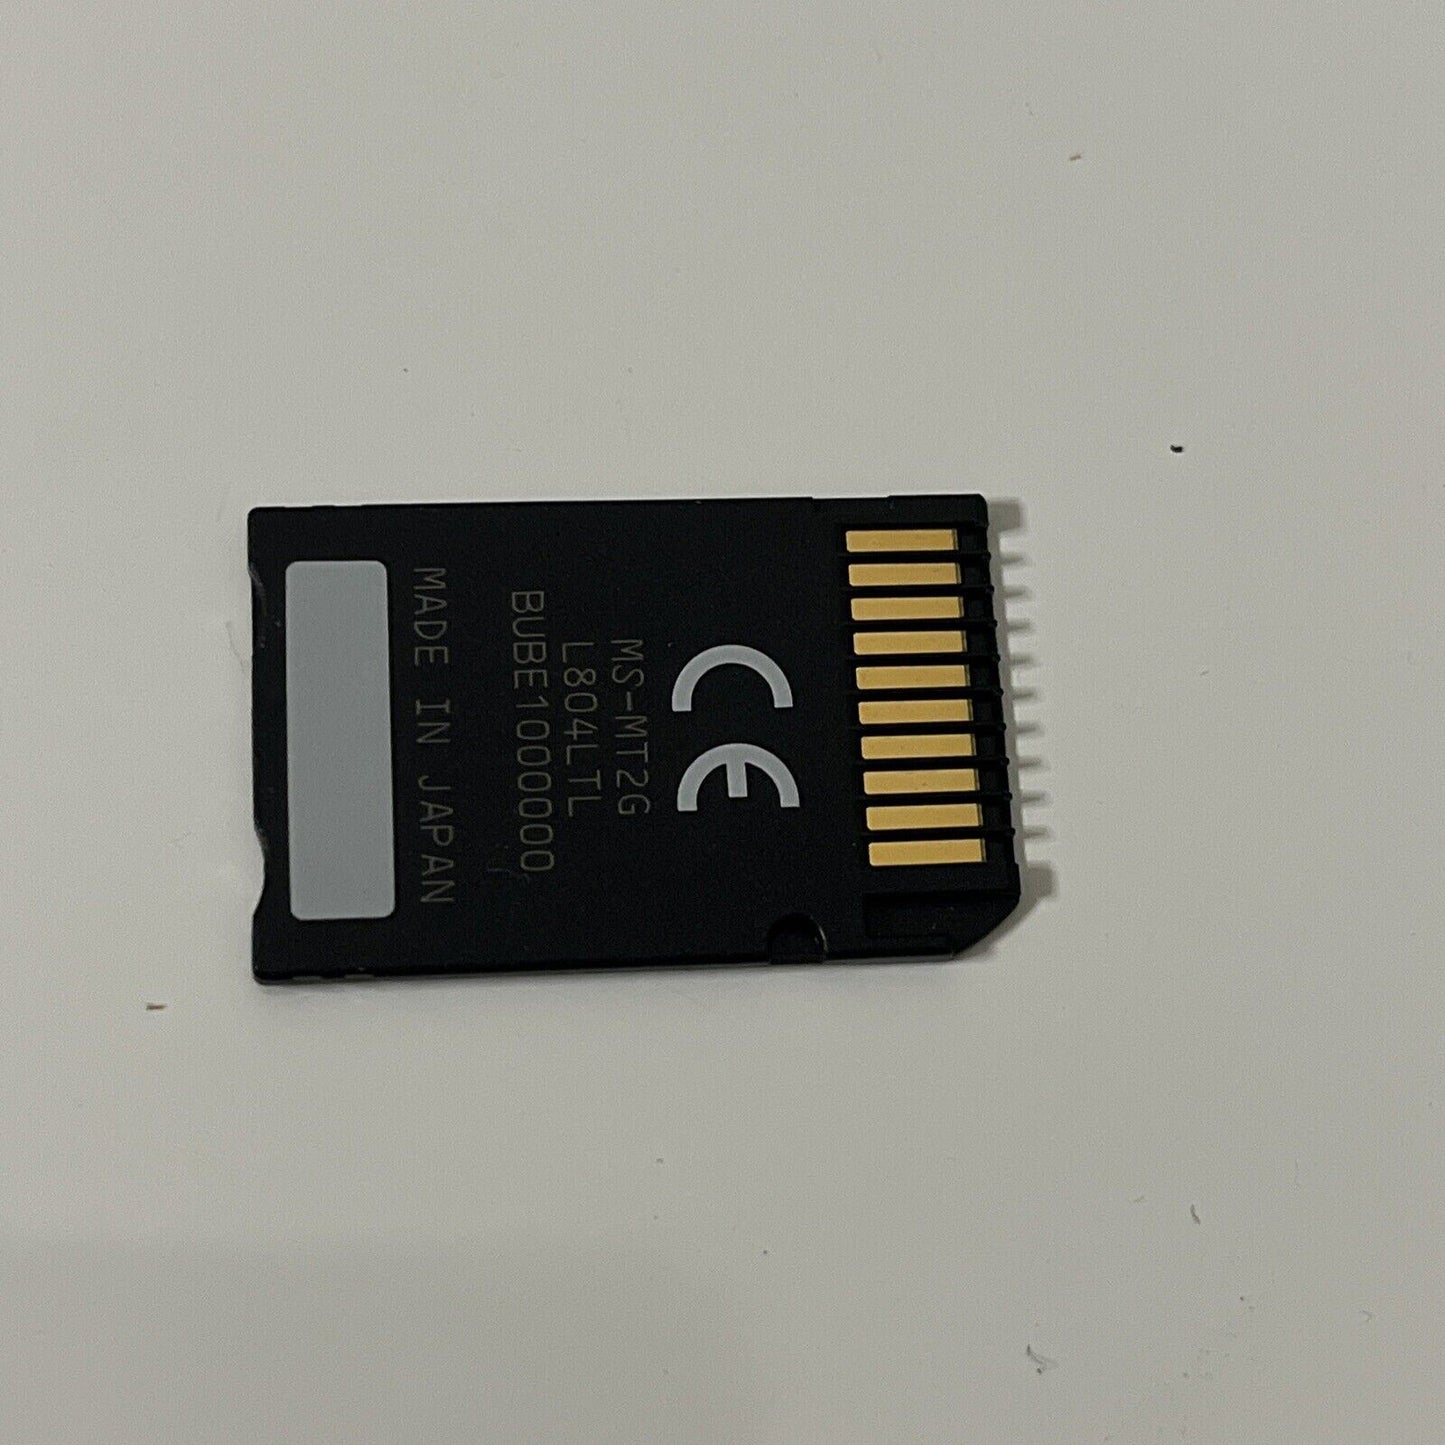 Genuine Sony 2GB Sony PSP Memory Stick Pro Duo Mark 2 Memory Card Cybershot